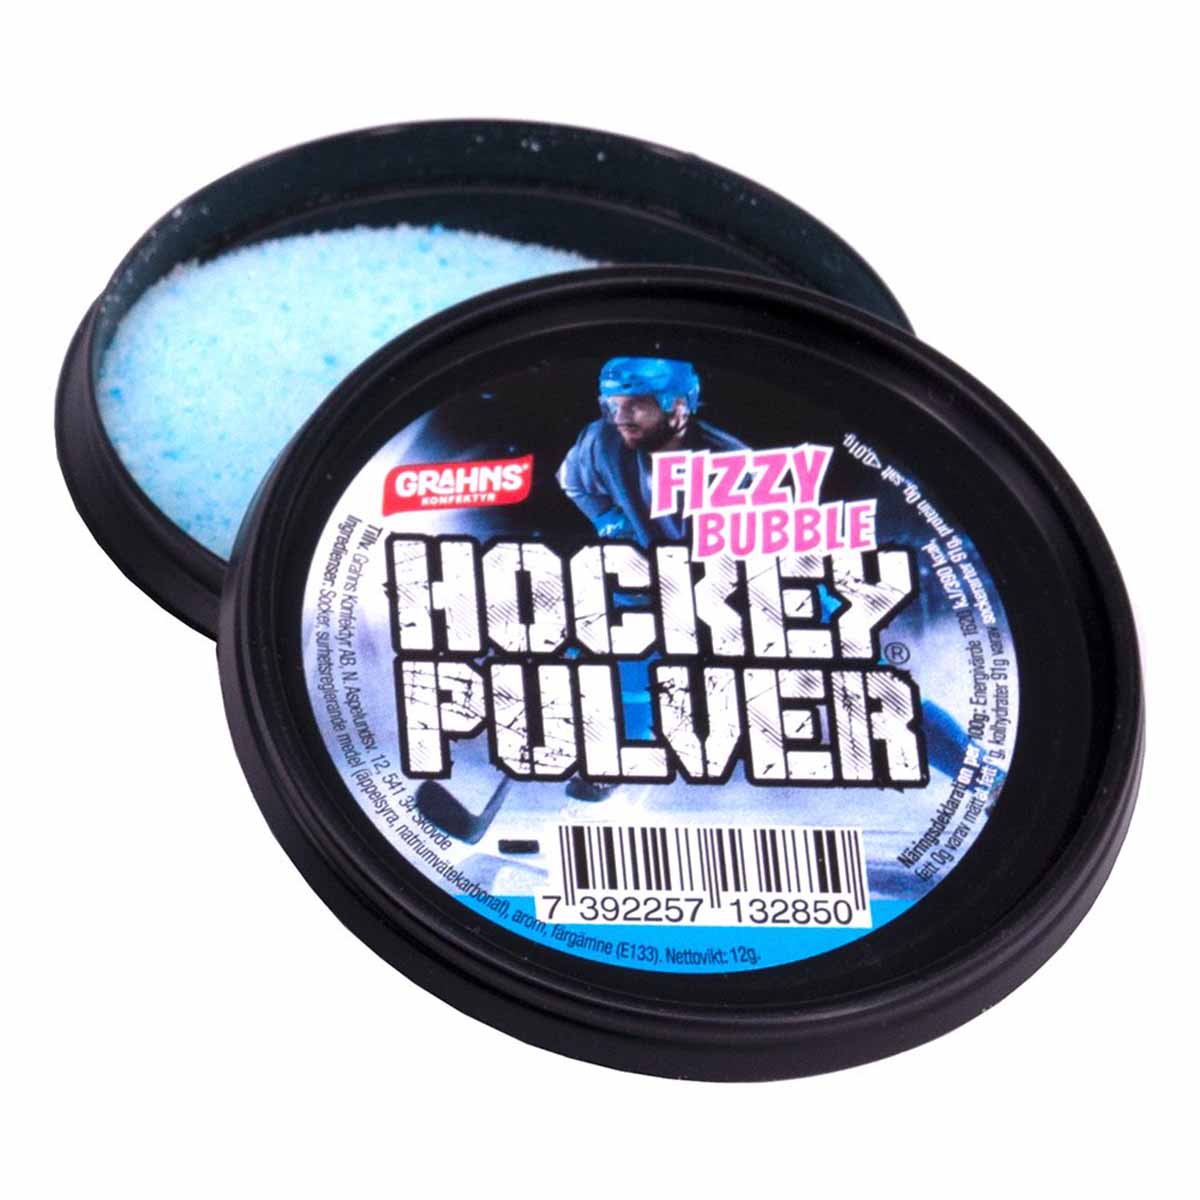 Godis hockeypulver fizzy bubble